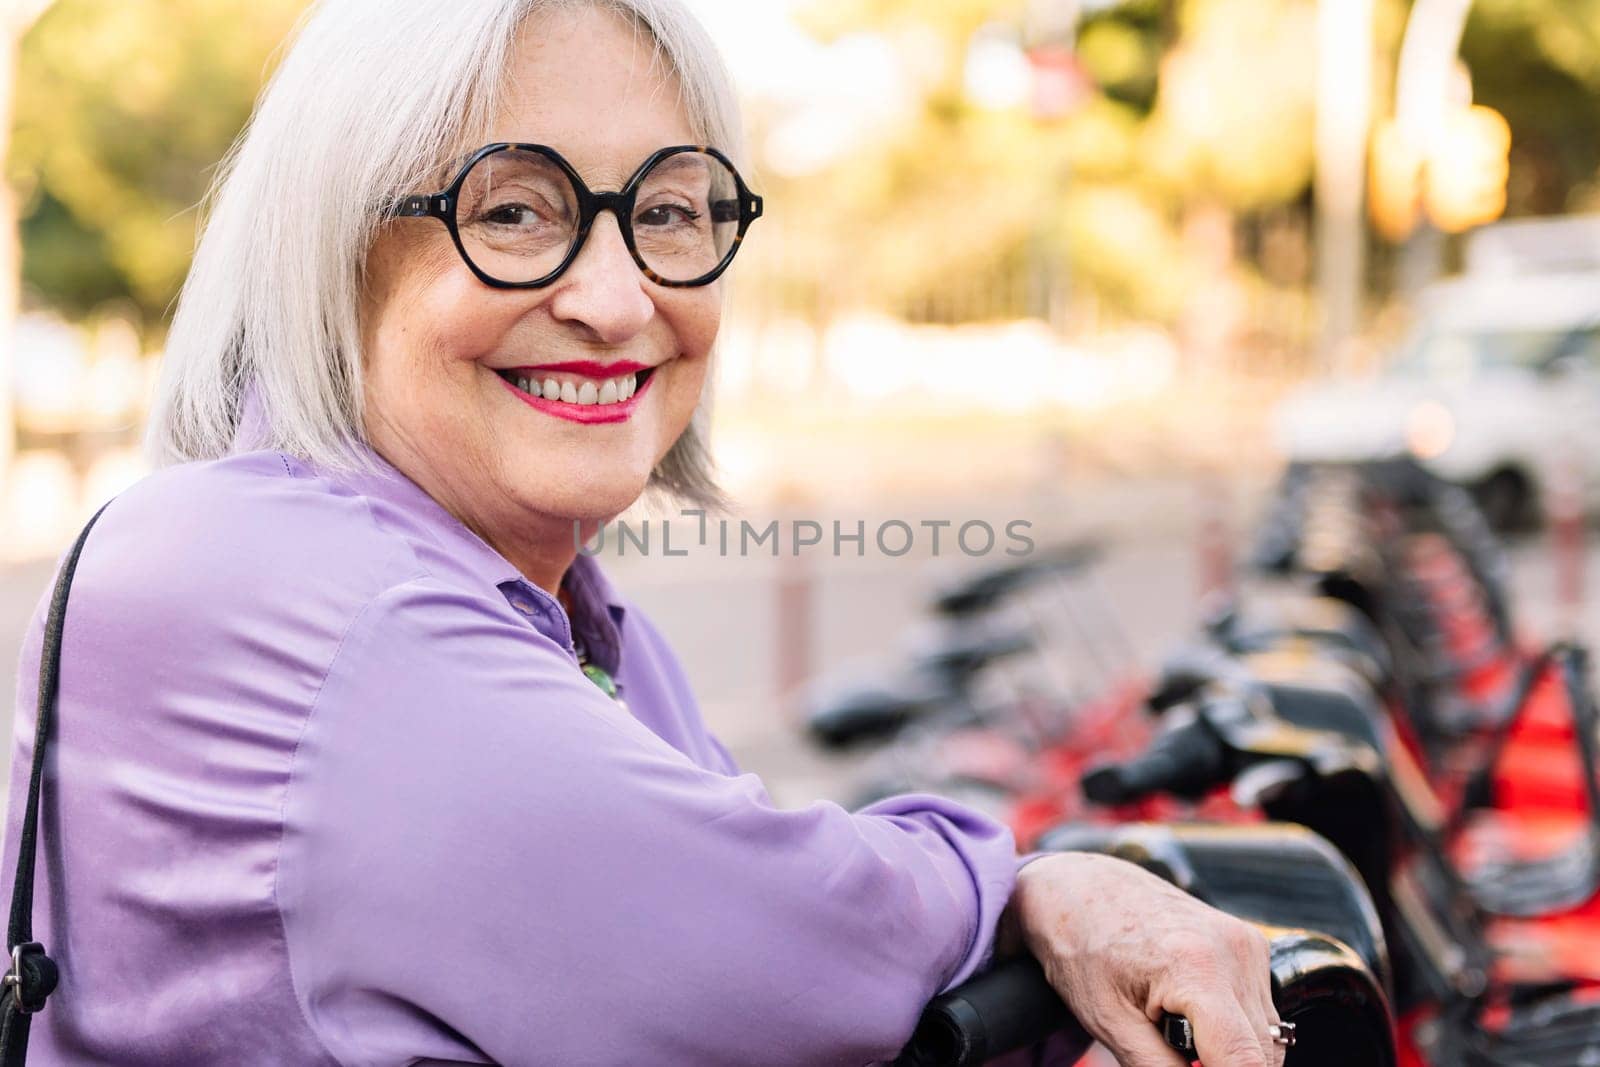 portrait of a smiling senior woman by raulmelldo